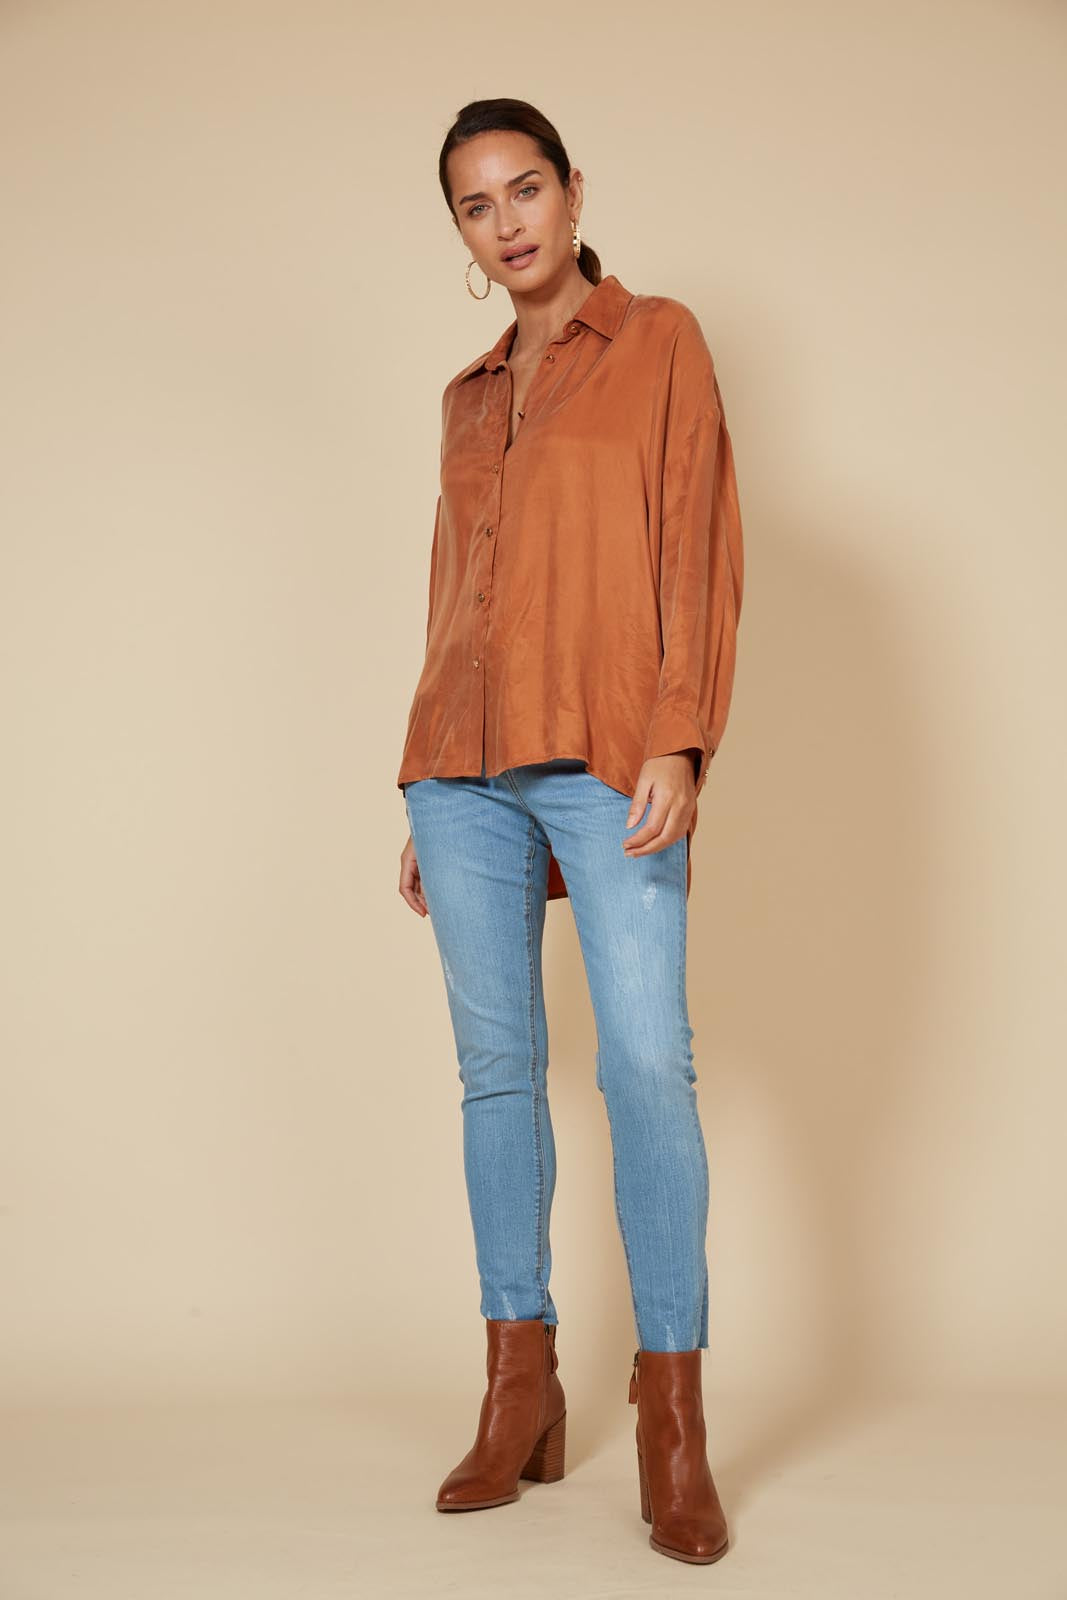 Vienetta Shirt - Caramel - eb&ive Clothing - Shirt L/S One Size